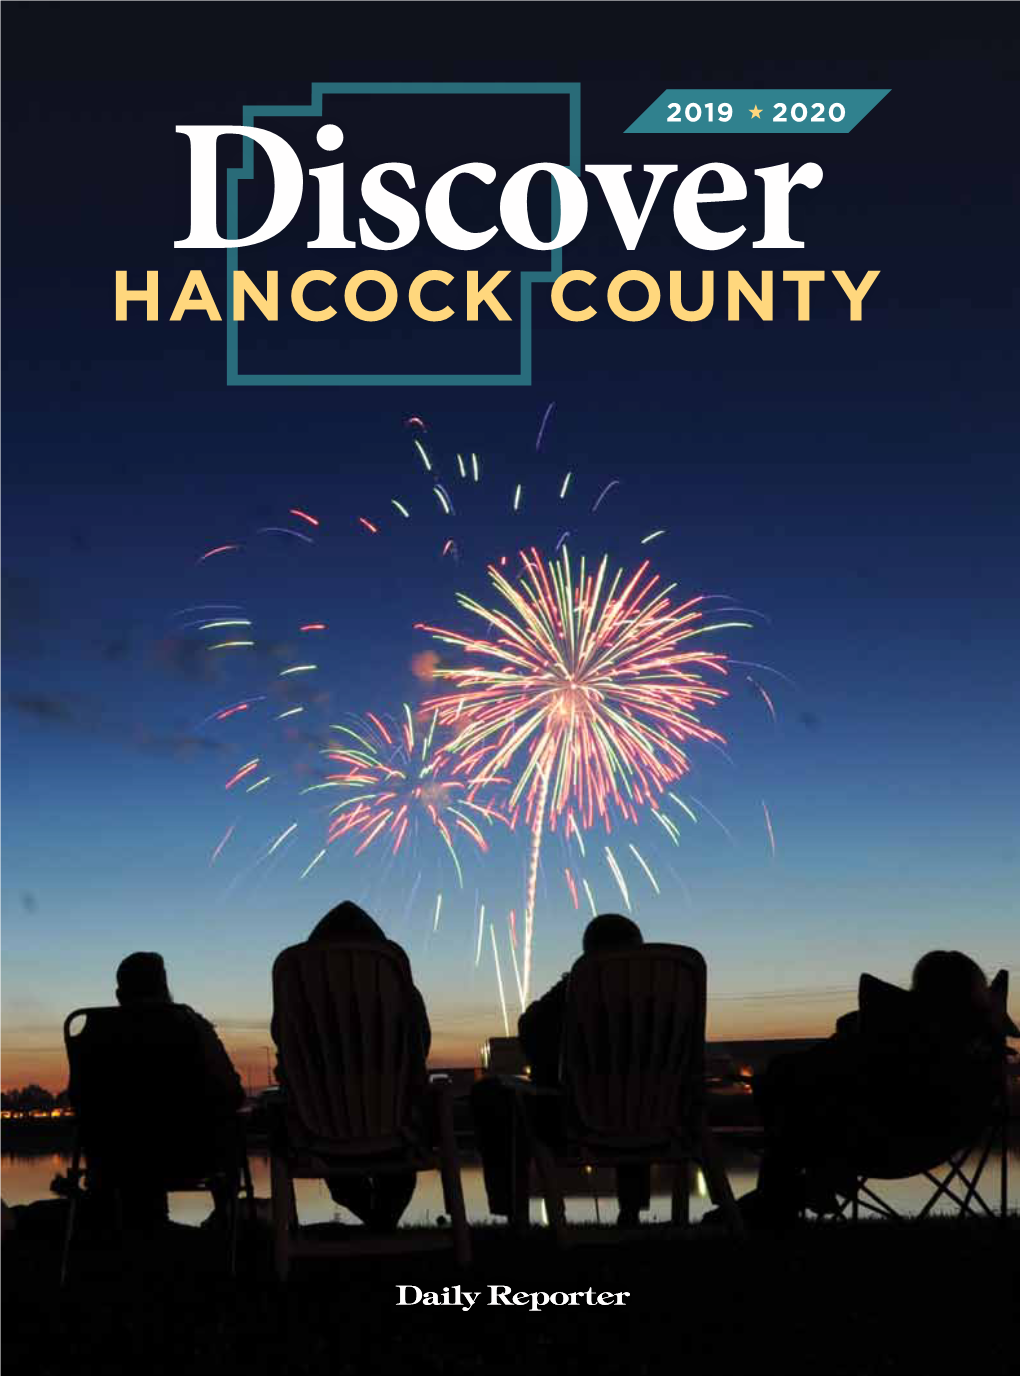 Hancock County 2019 • Daily Reporter 1 Mobile: 317-997-4663 Mobile: 317-919-4198